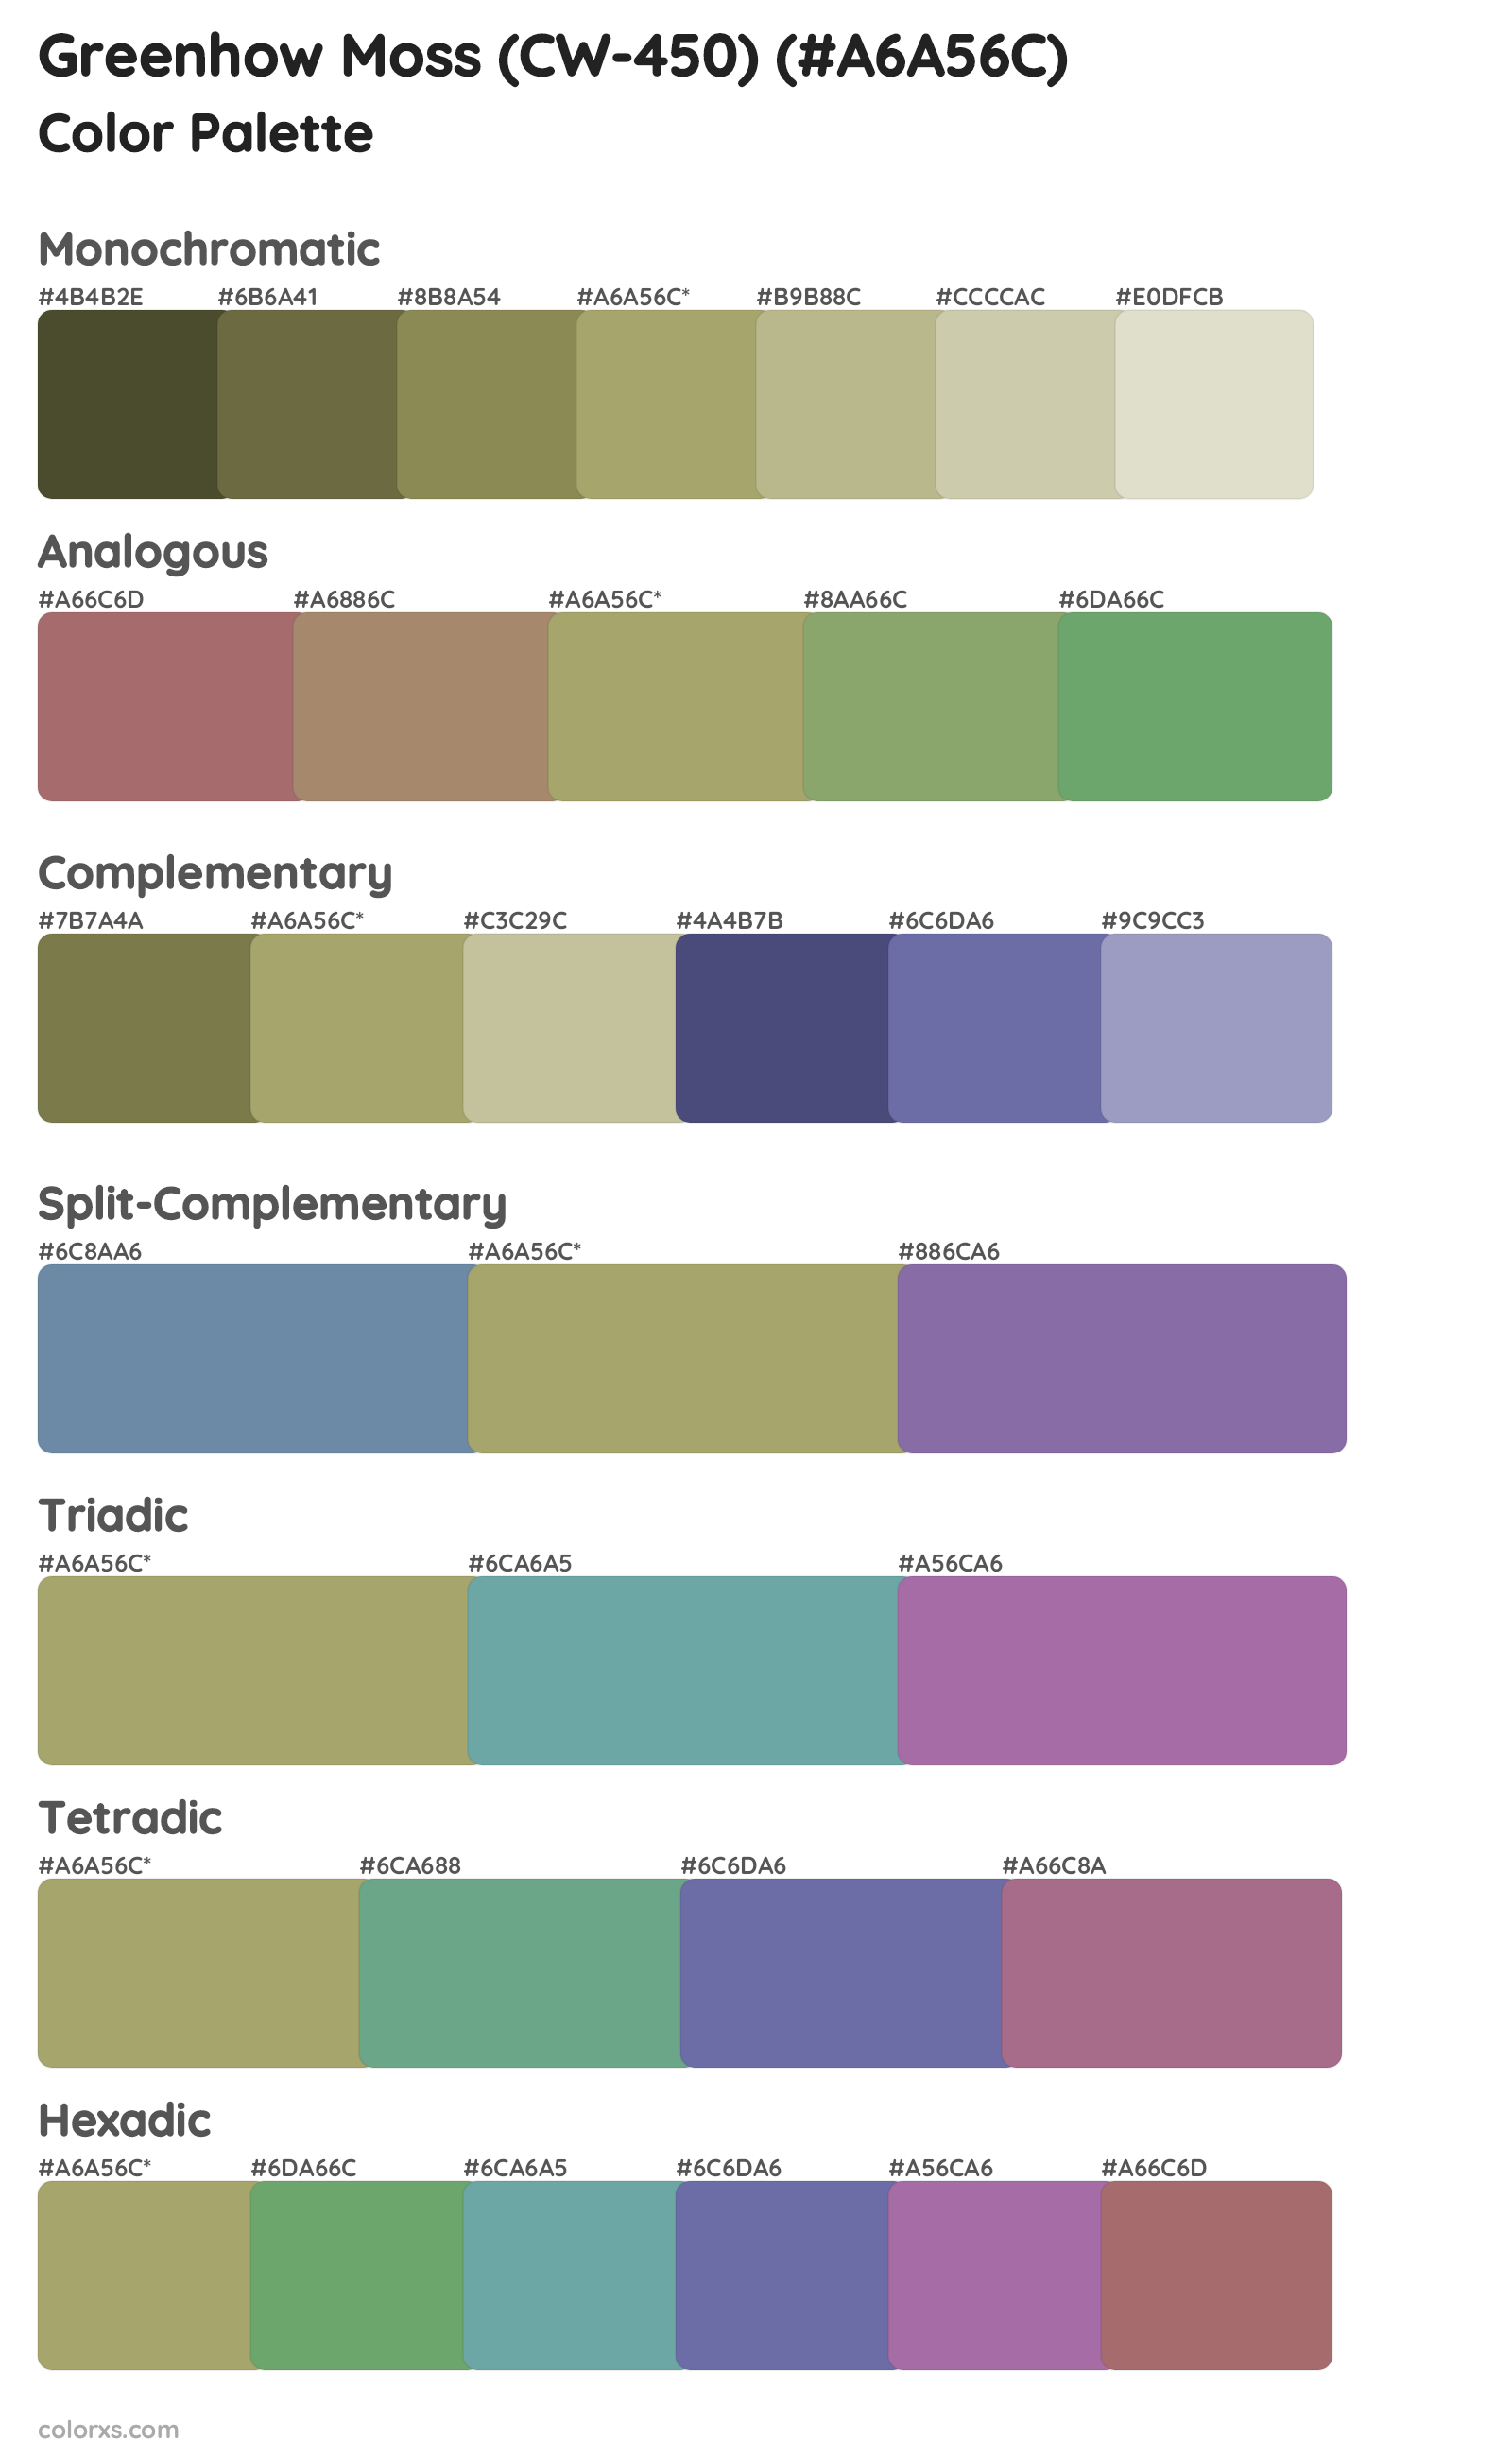 Greenhow Moss (CW-450) Color Scheme Palettes